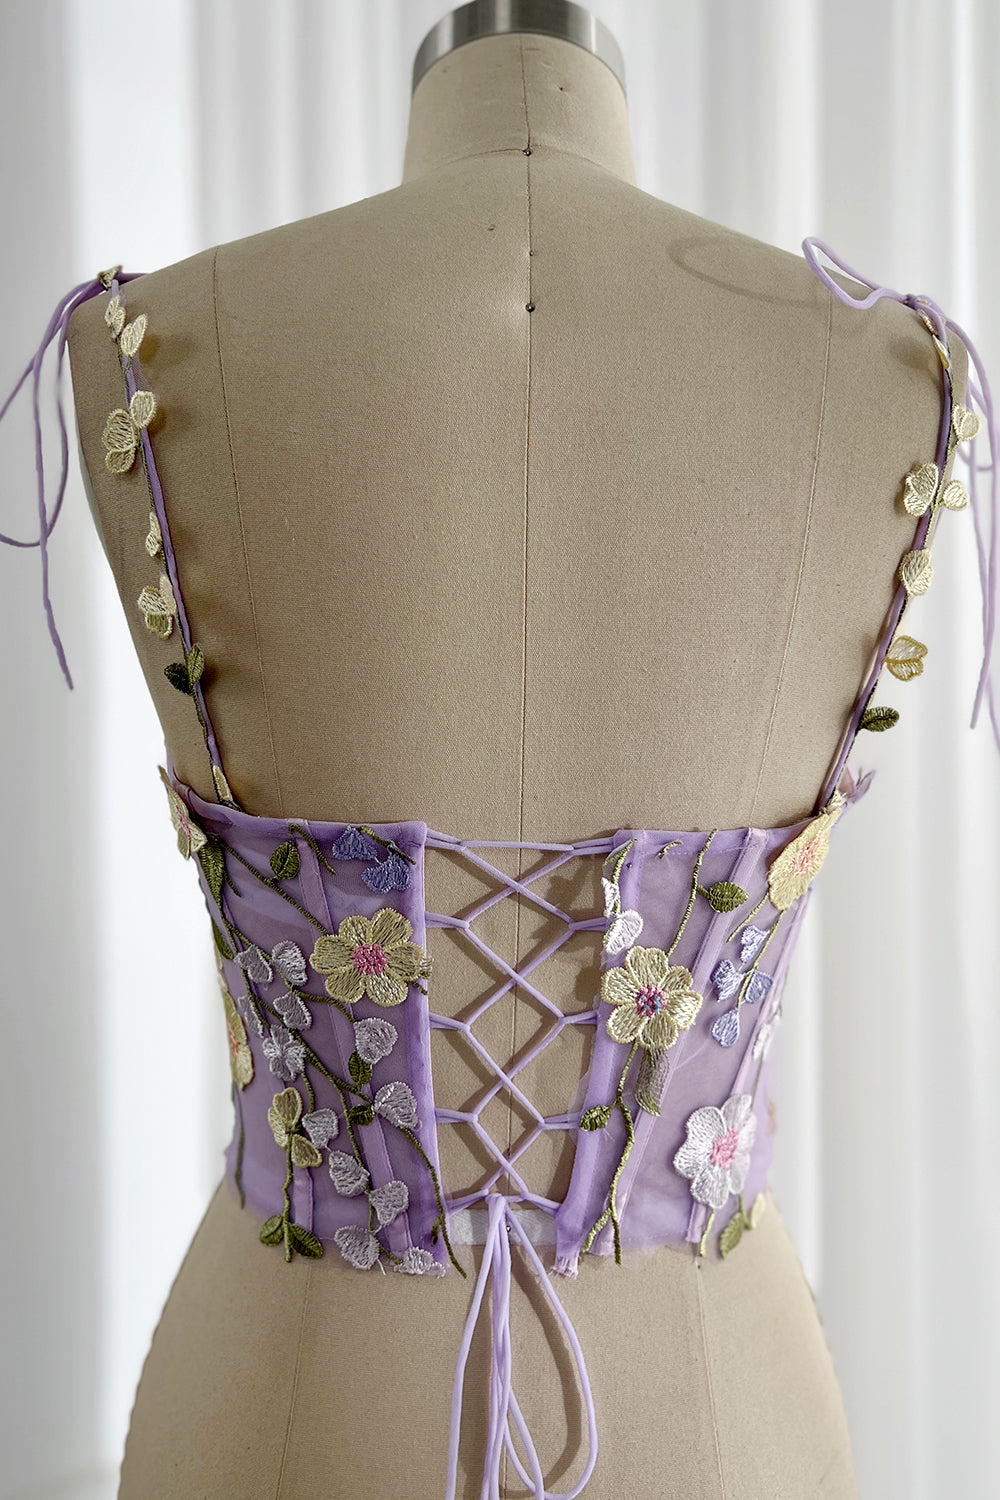 MissJophiel Embroidery Floral Corset with Removable Straps